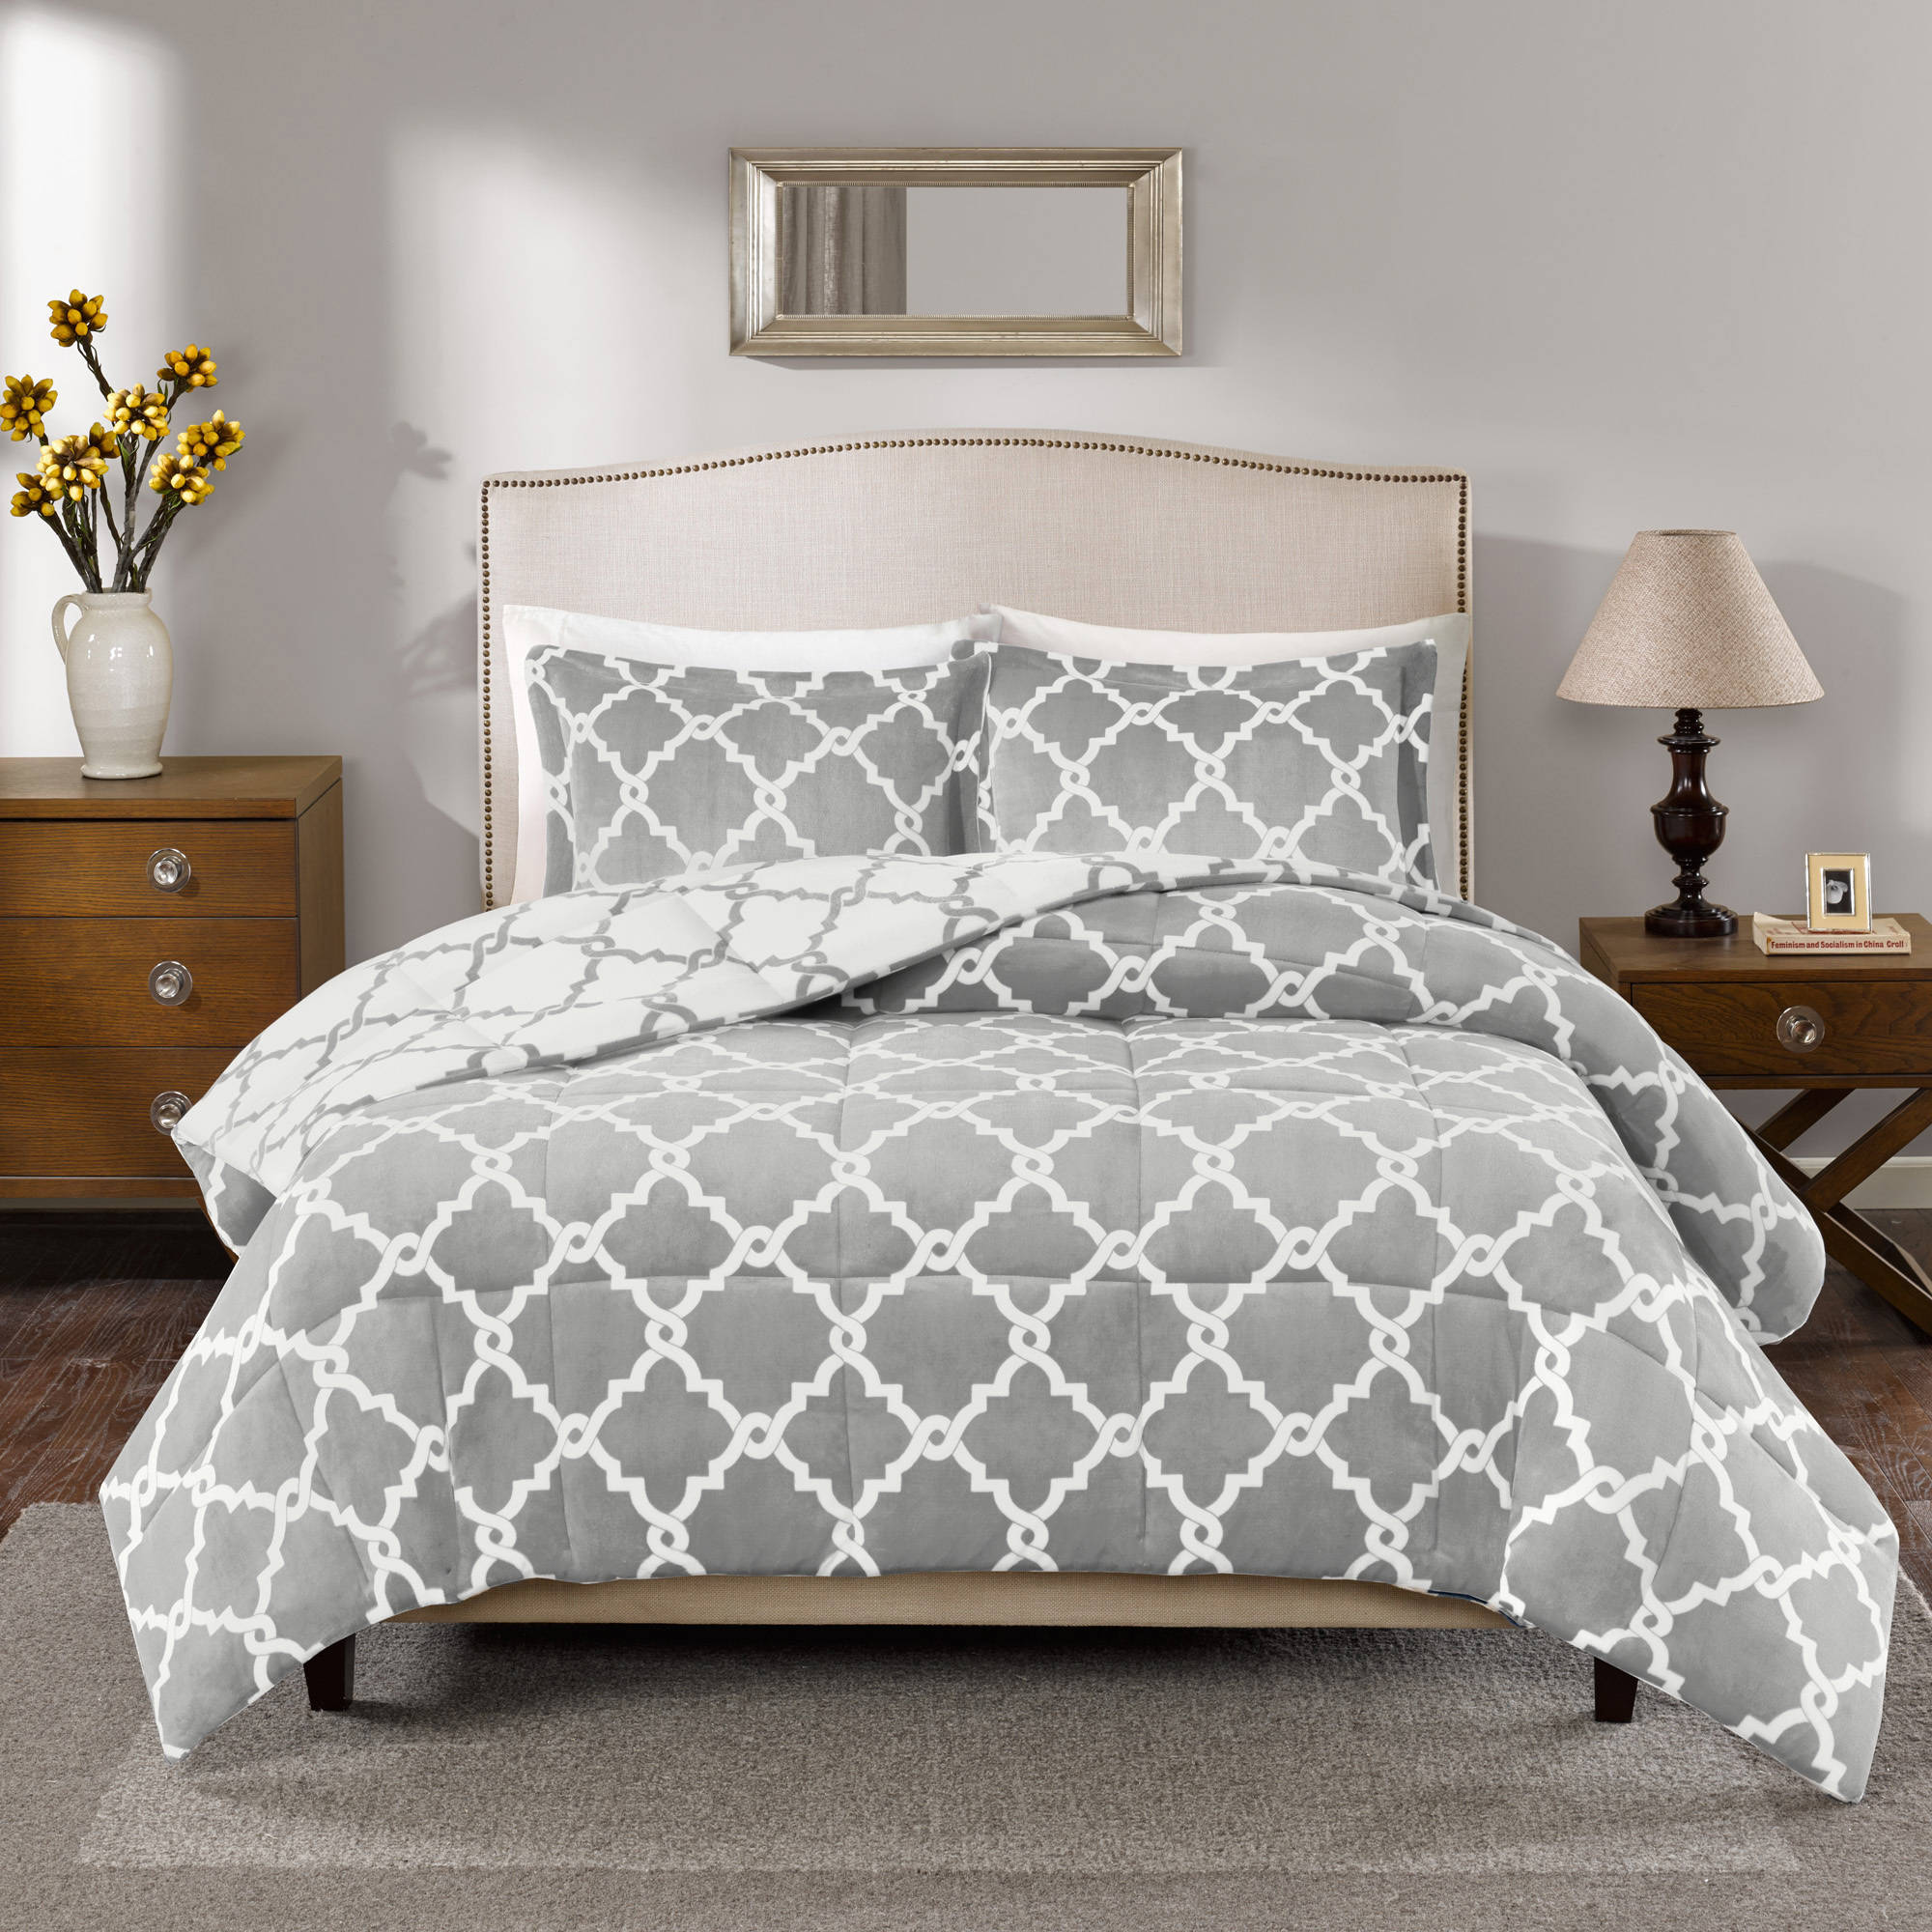 True North by Sleep Philosophy 2-Piece Grey Reversible Plush Microvelour Print Comforter Set, Twin - image 1 of 4